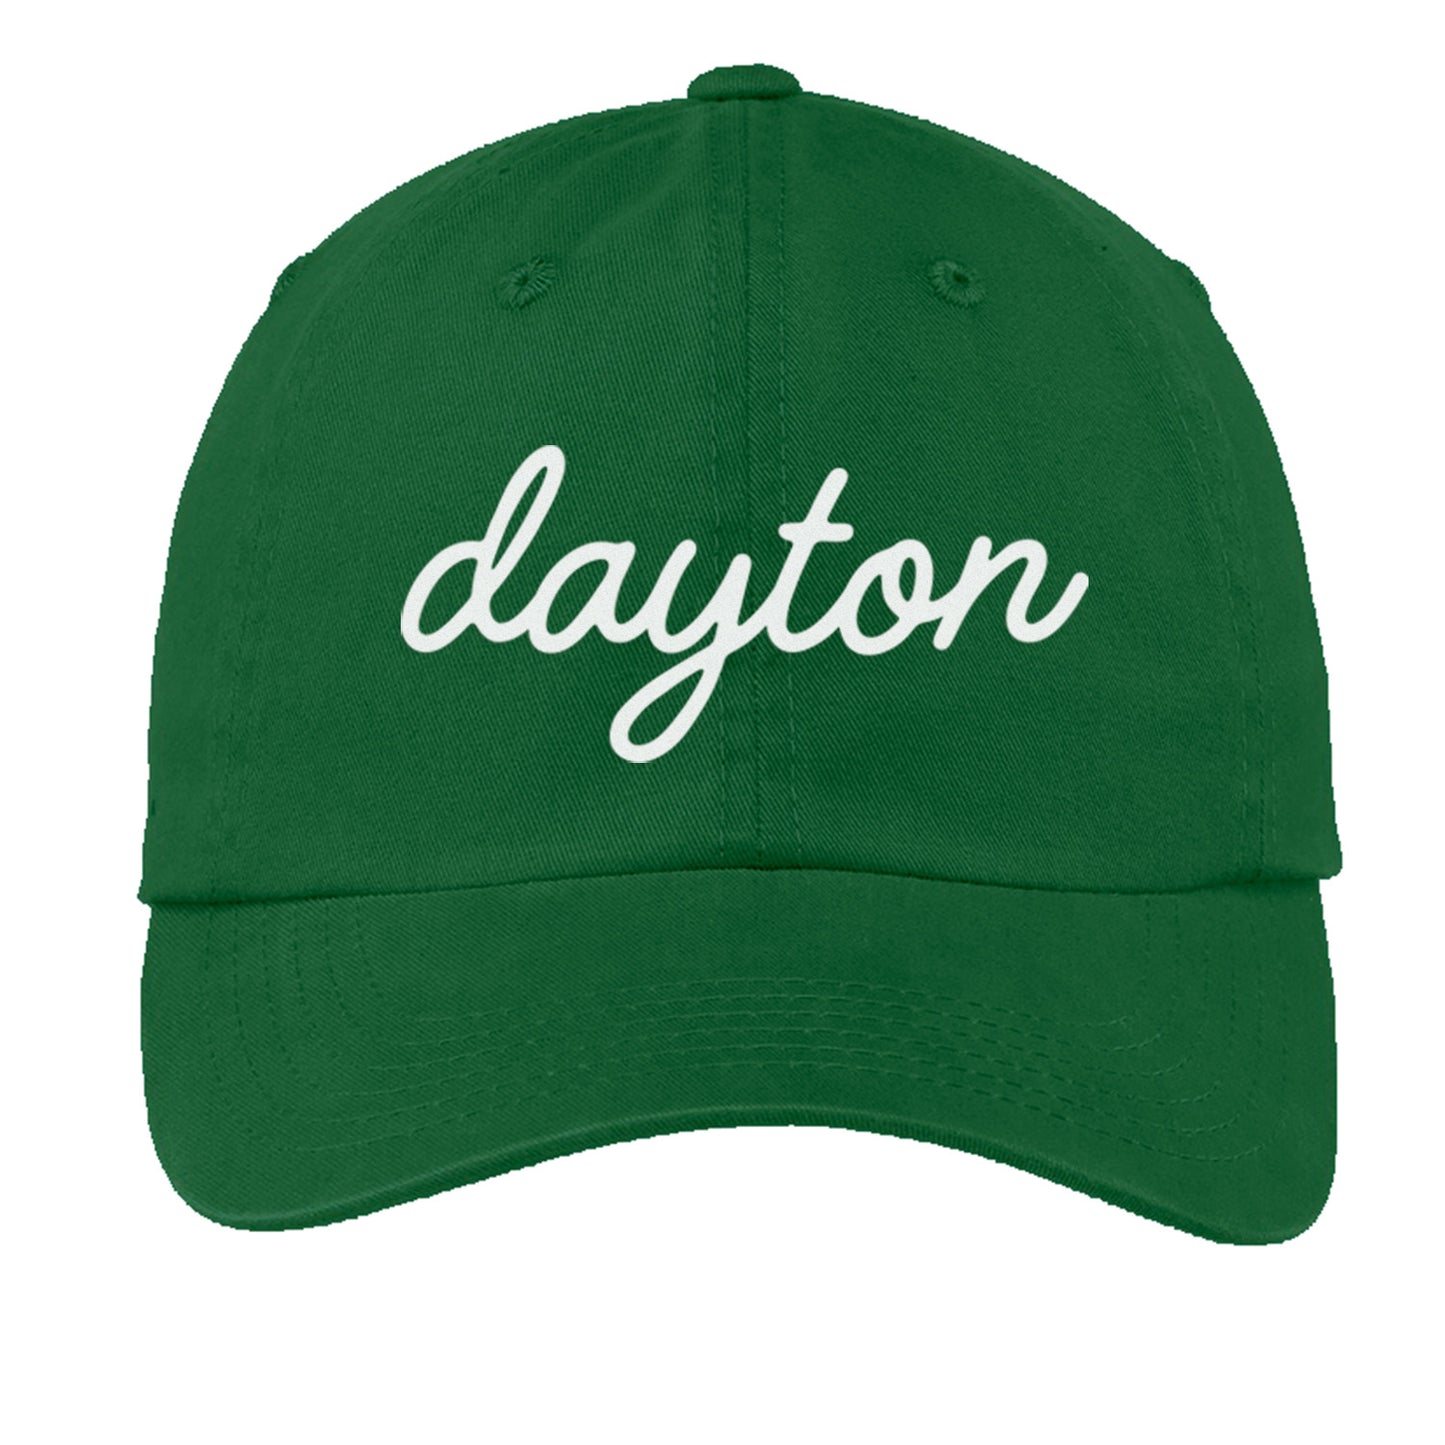 Dayton Cursive Baseball Cap